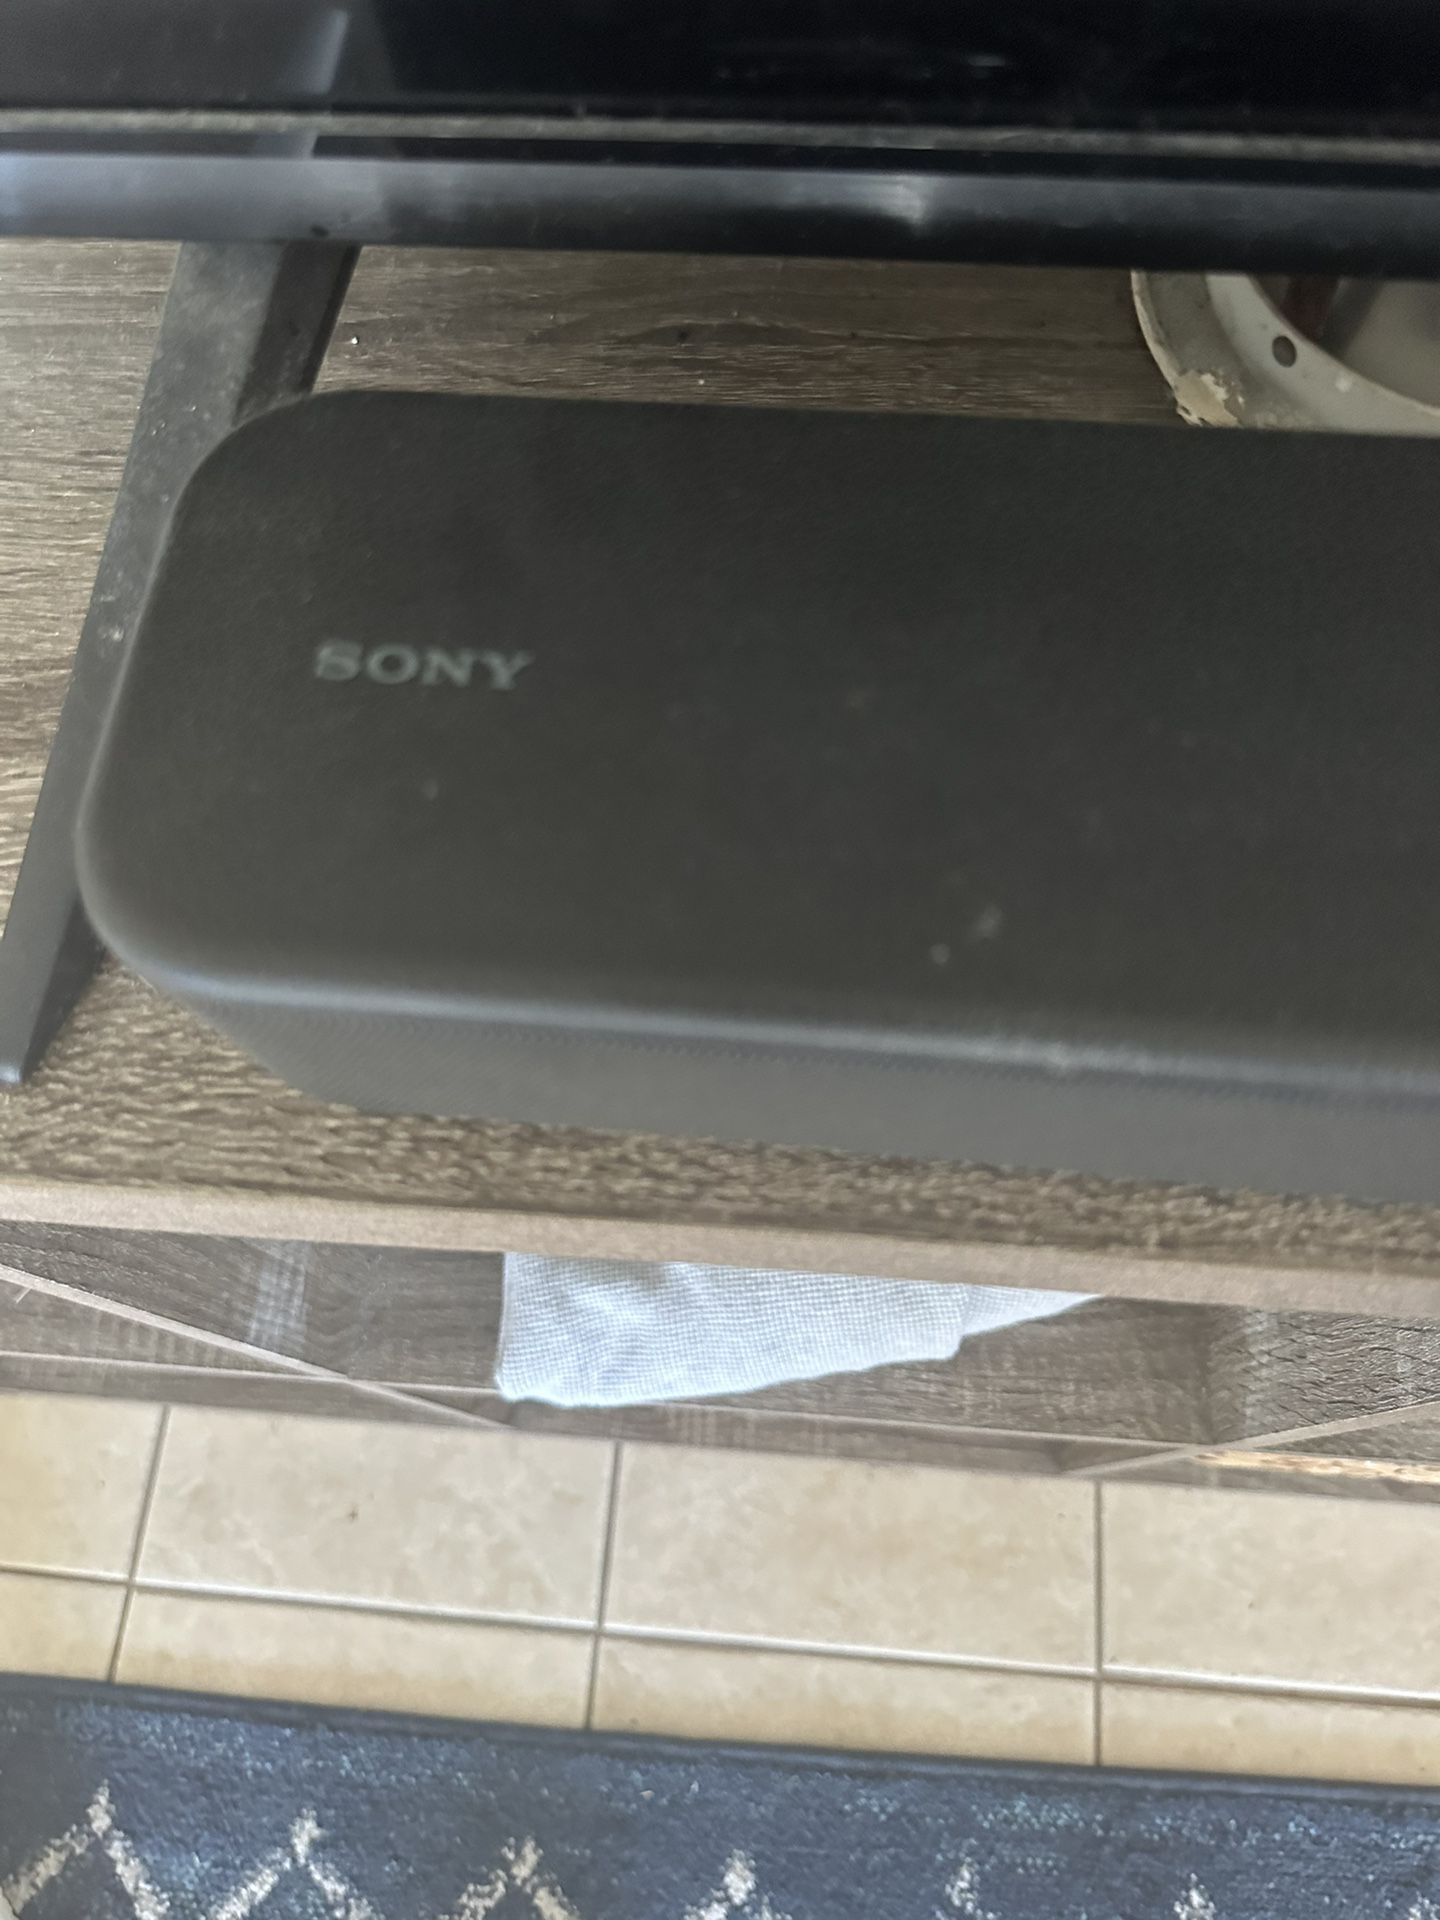 Sony Sound Bar 